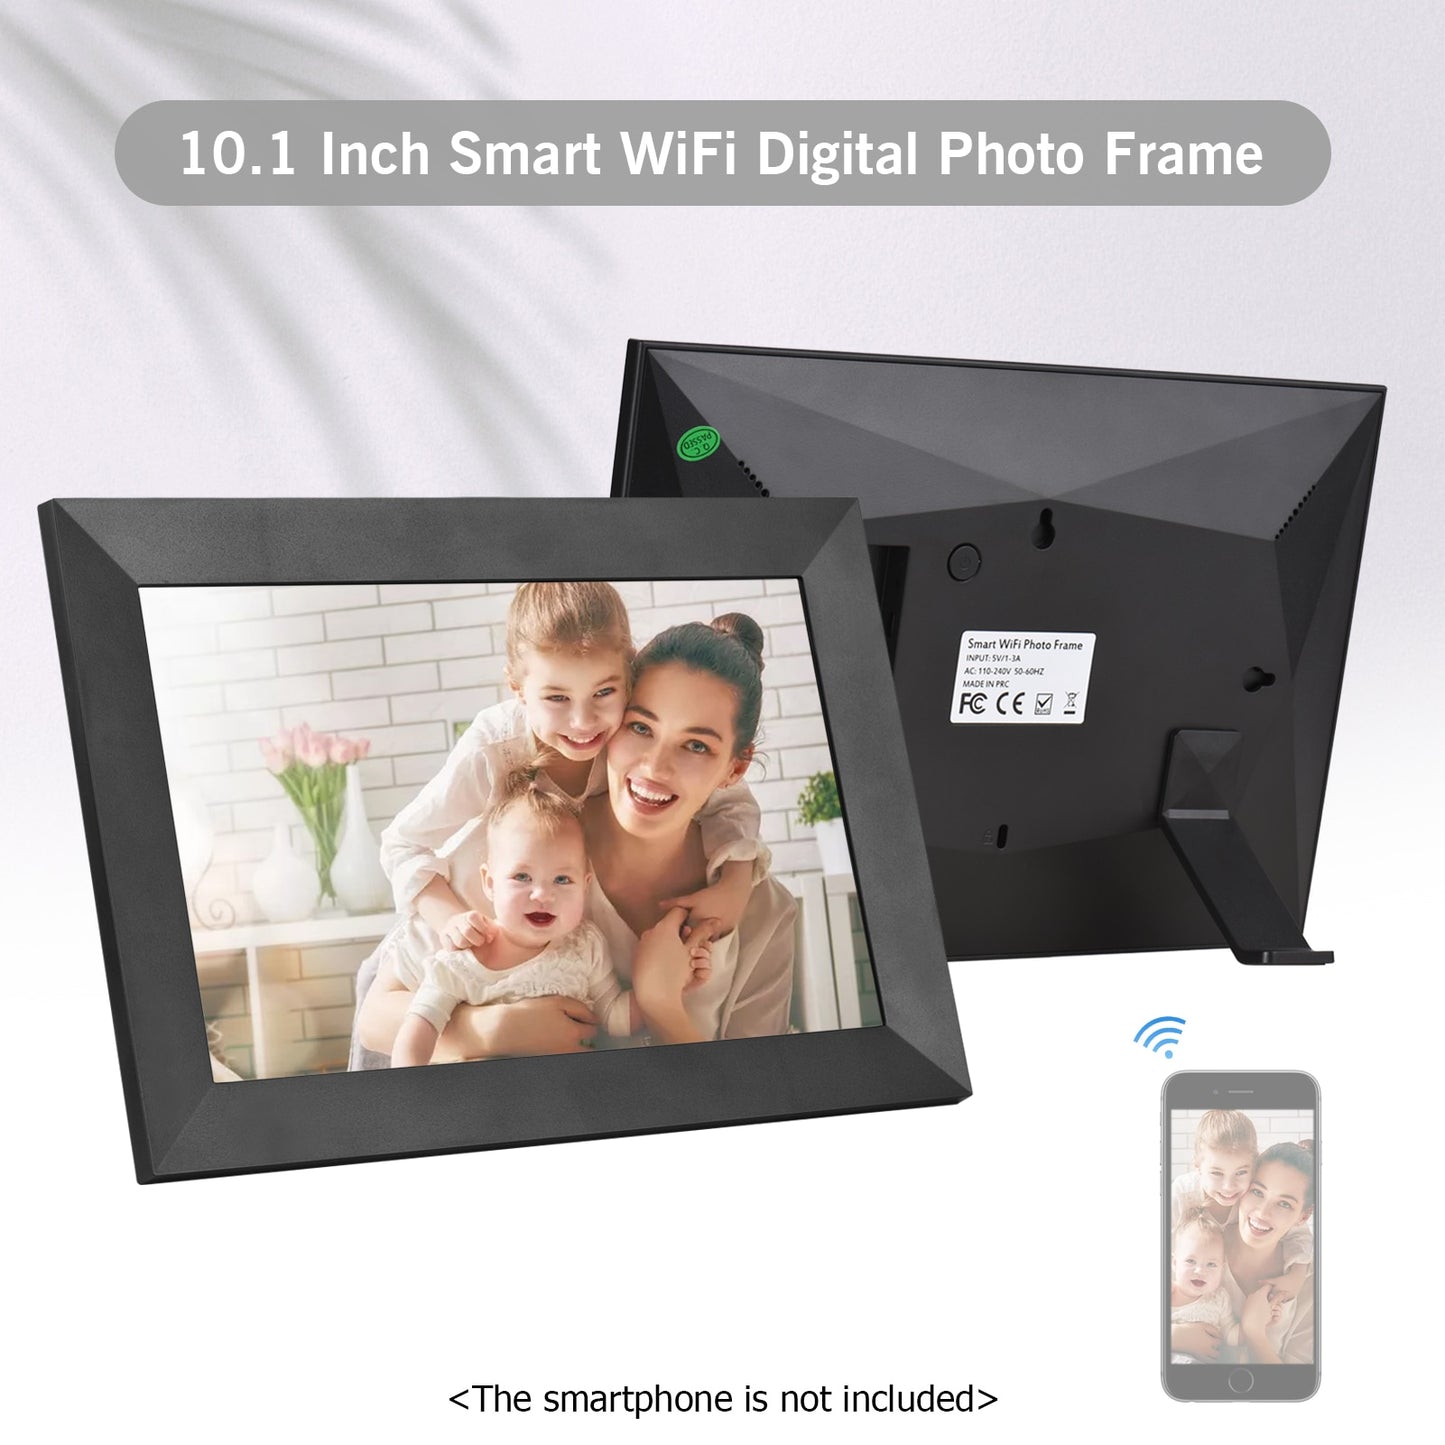 Smart WiFi Photo Frame